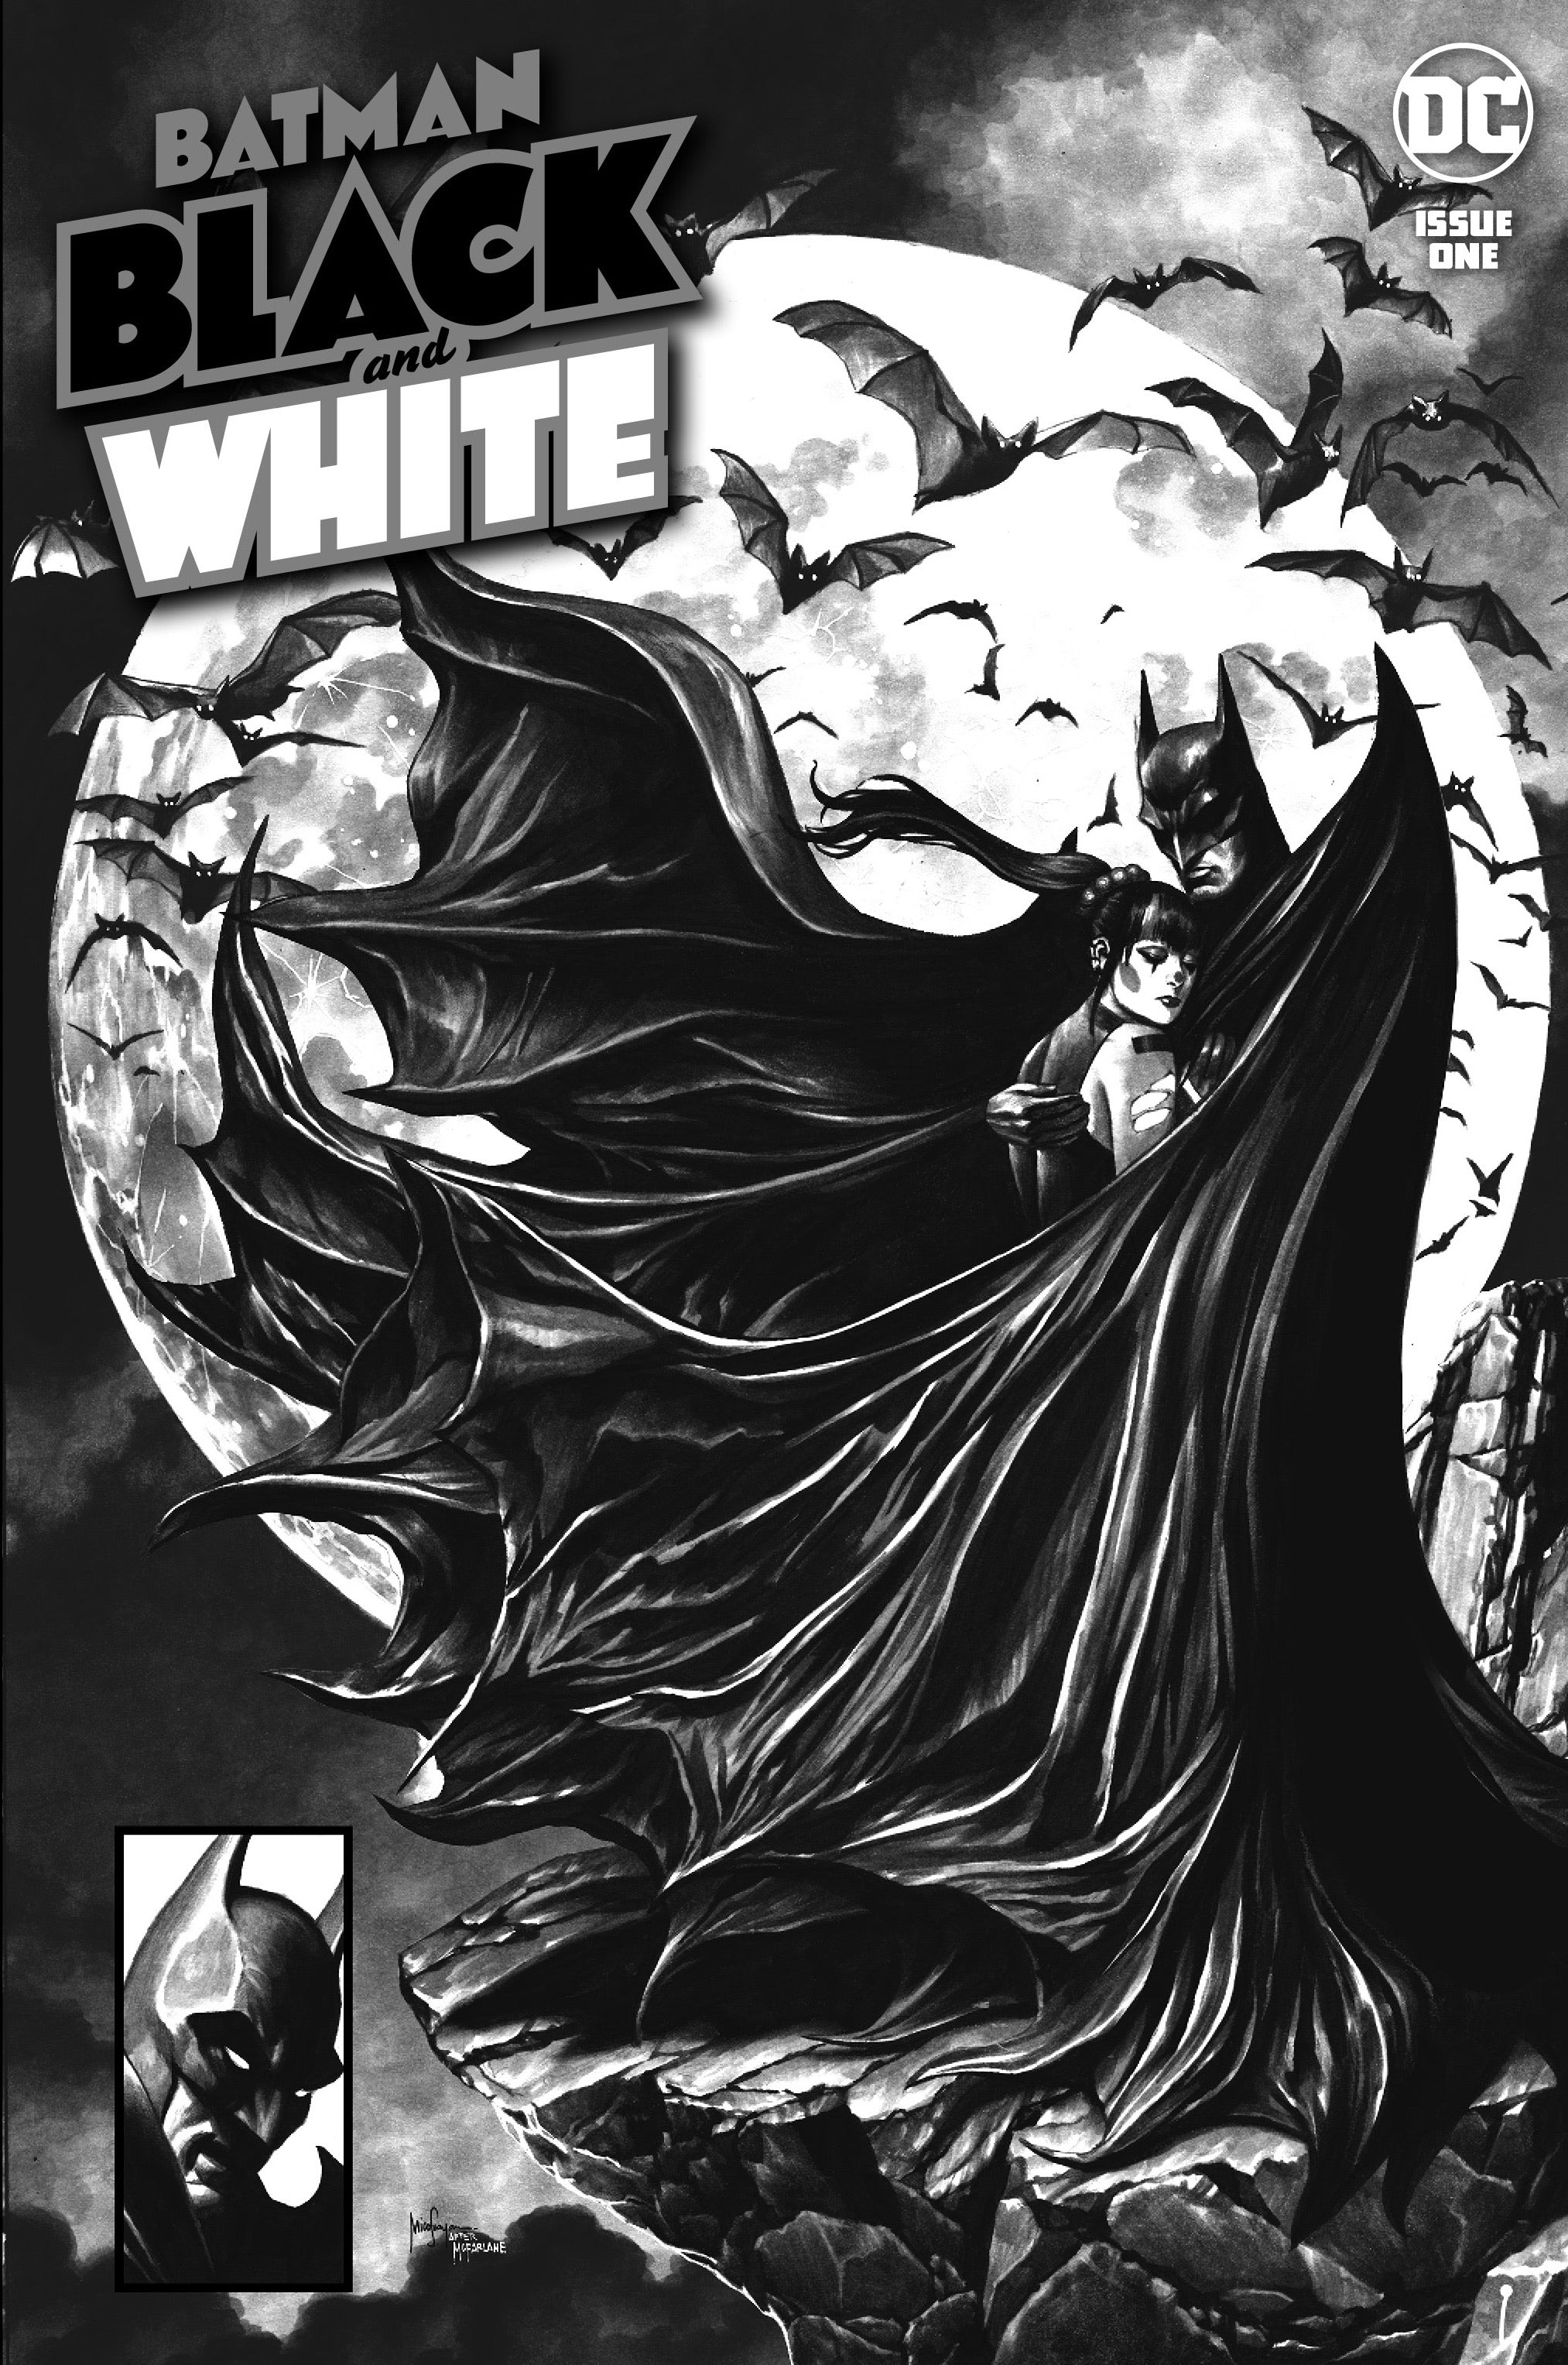 BATMAN BLACK & WHITE #1 MICO SUAYAN EXCLUSIVE